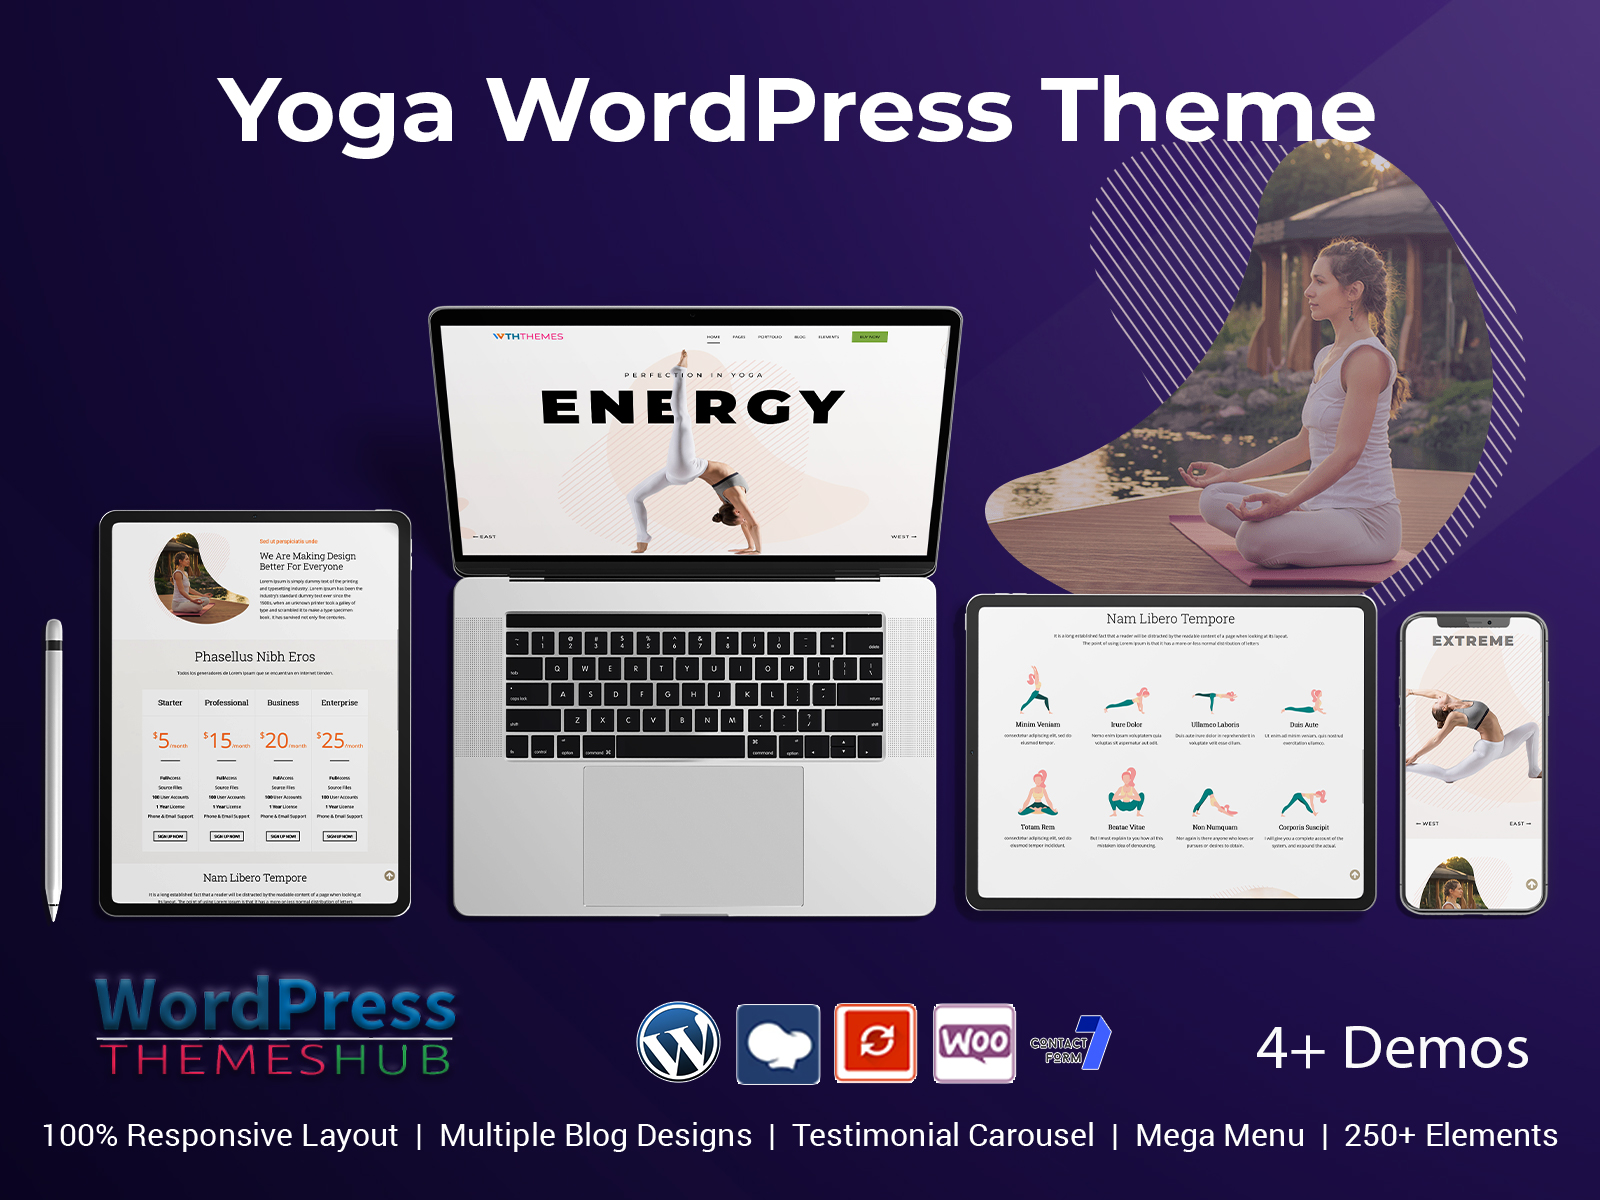 Yoga WordPress Theme To Make Your Yoga Website